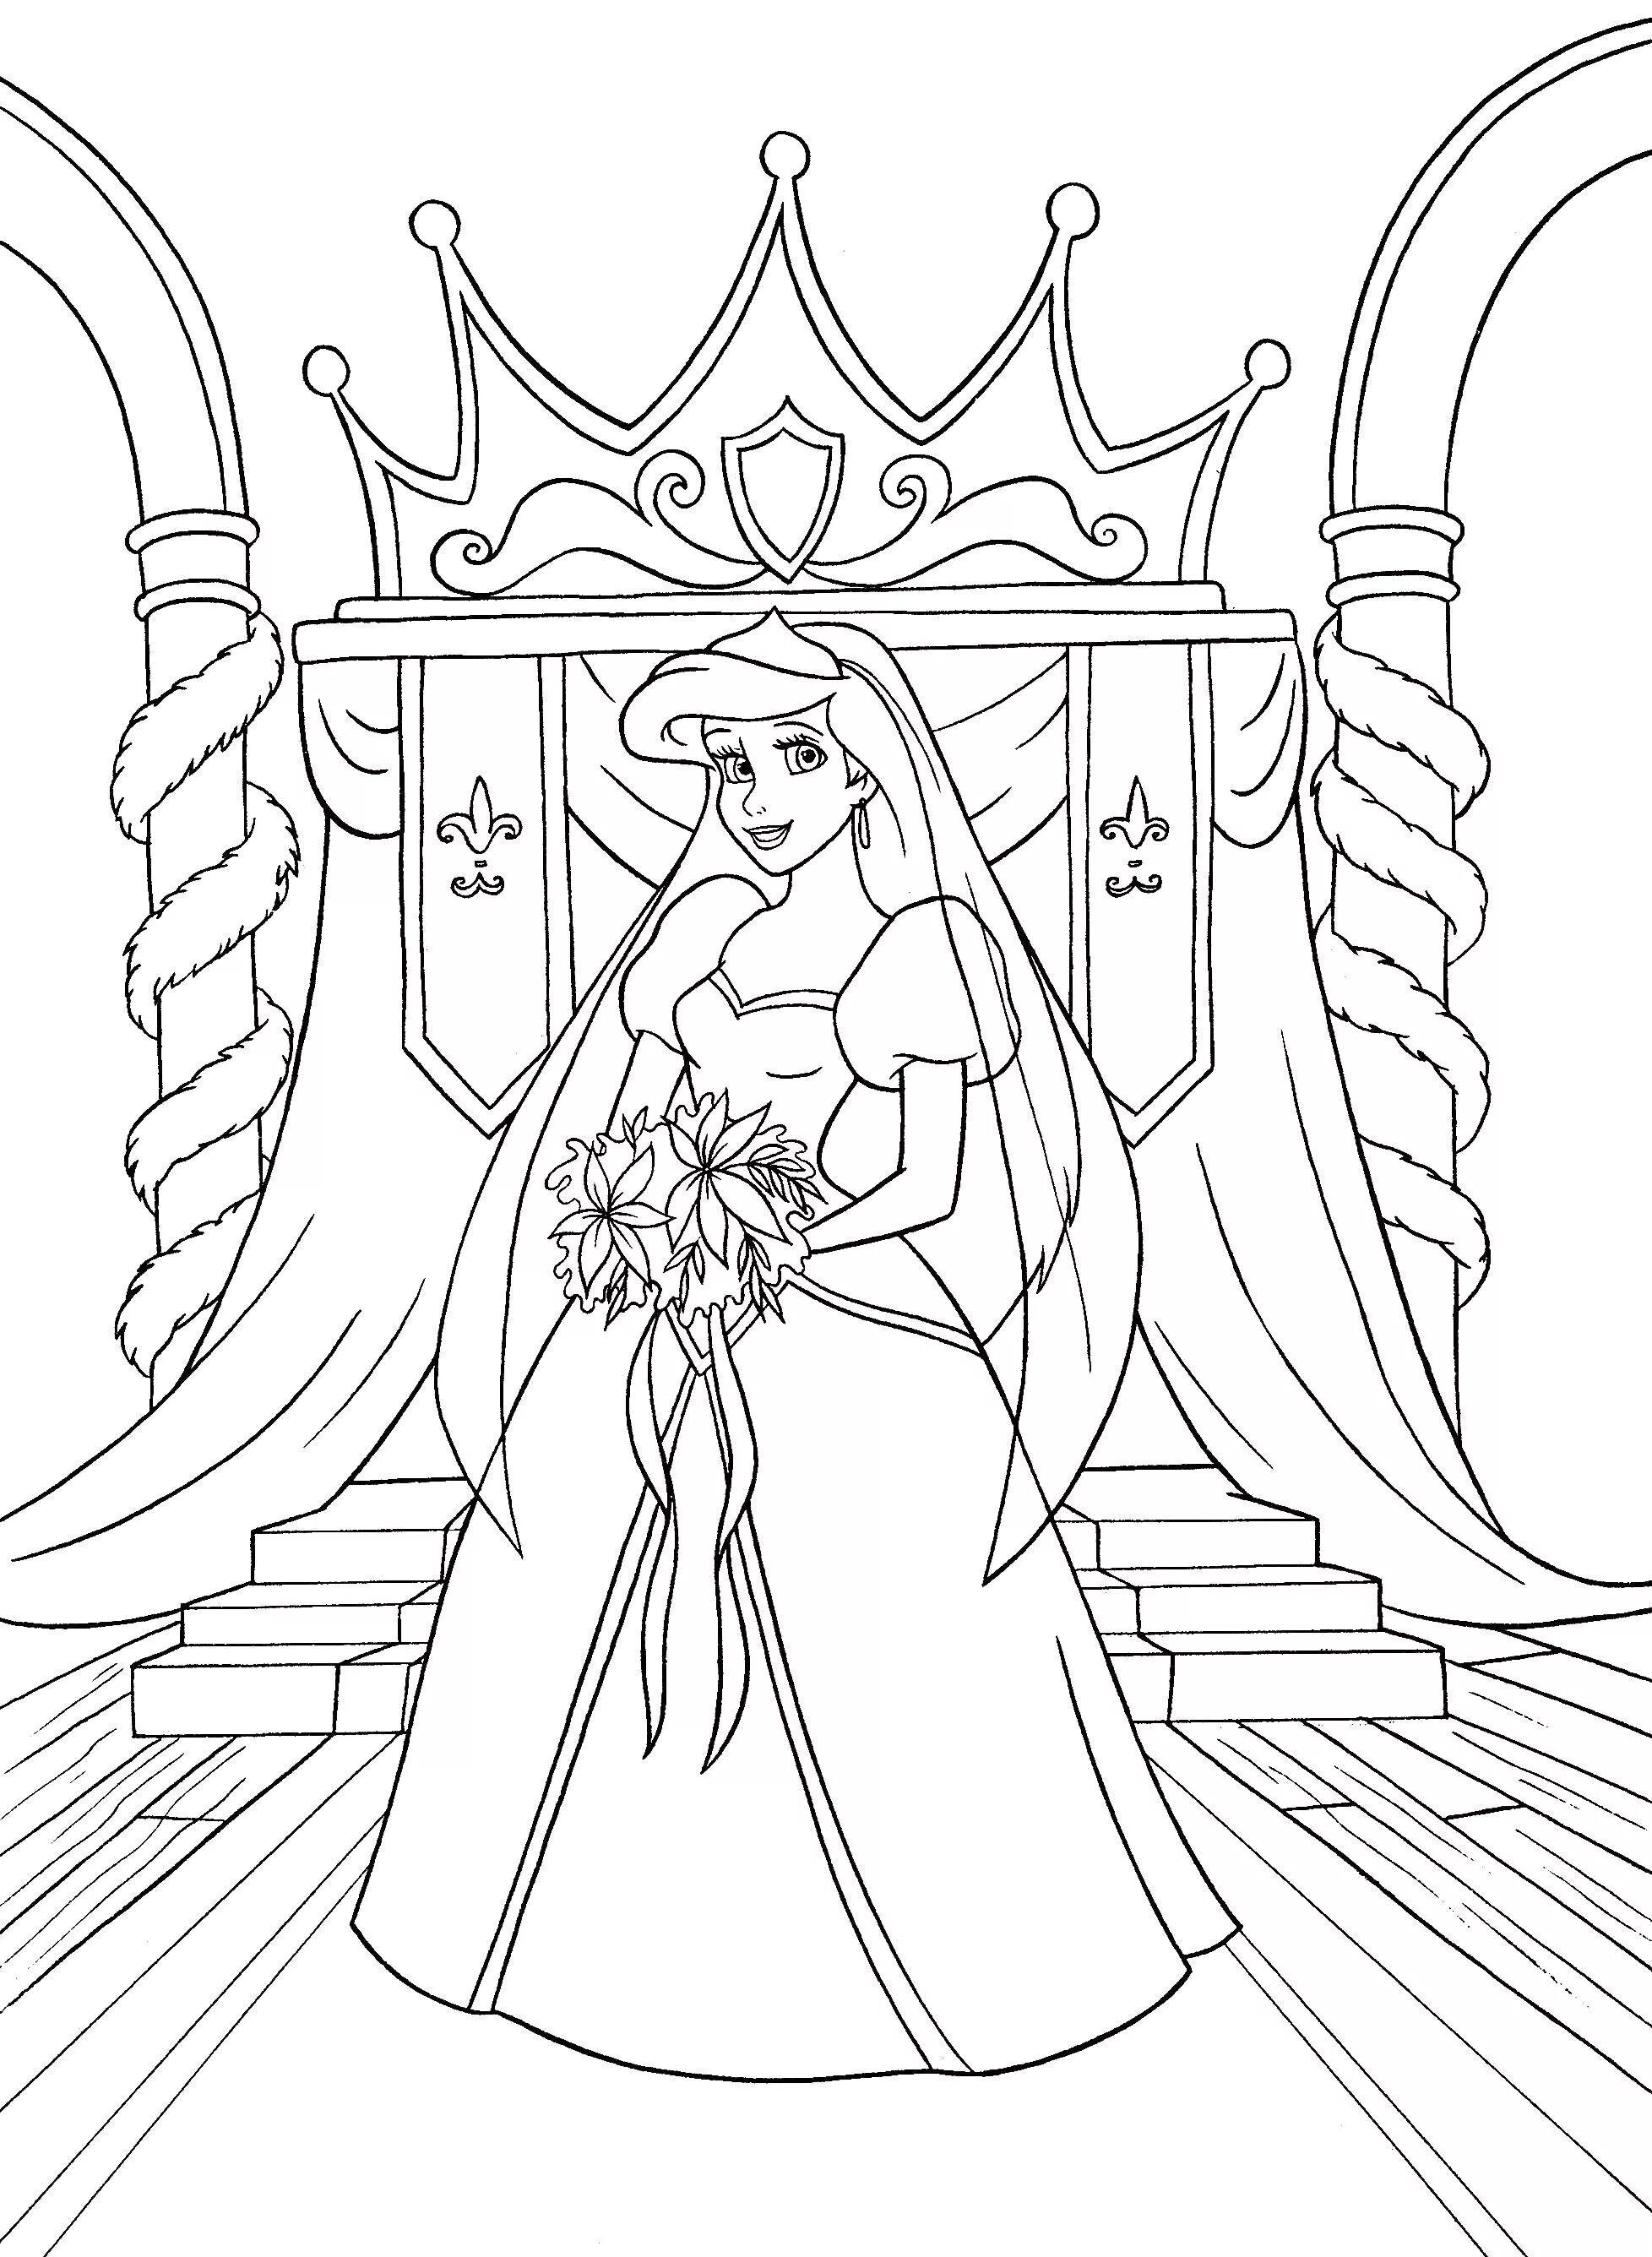 Princess in the castle #14